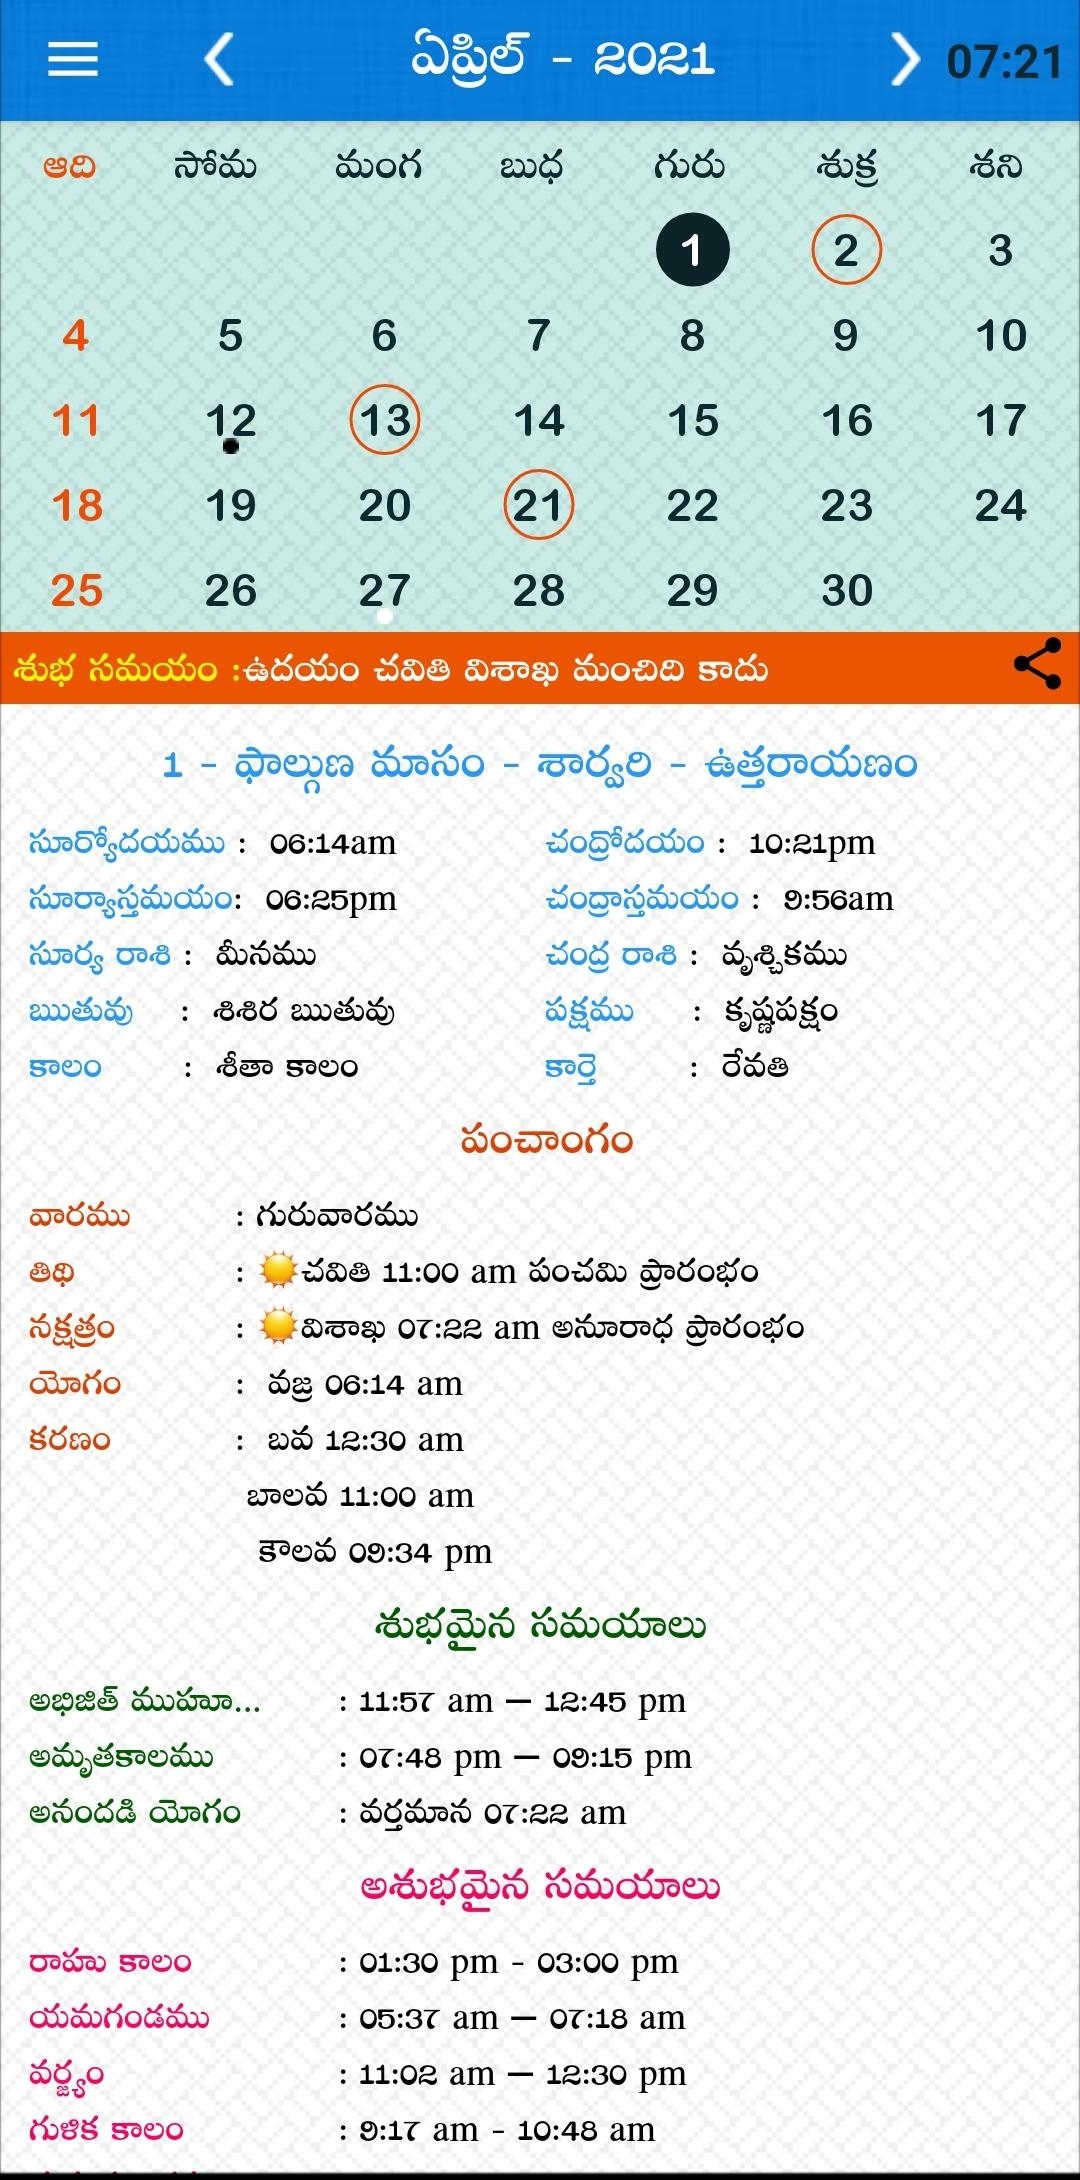 Telugu Calendar 2021 Telugu Panchangam 2020 - 2021 For Android - Apk Download June 2021 Calendar Telugu Panchangam